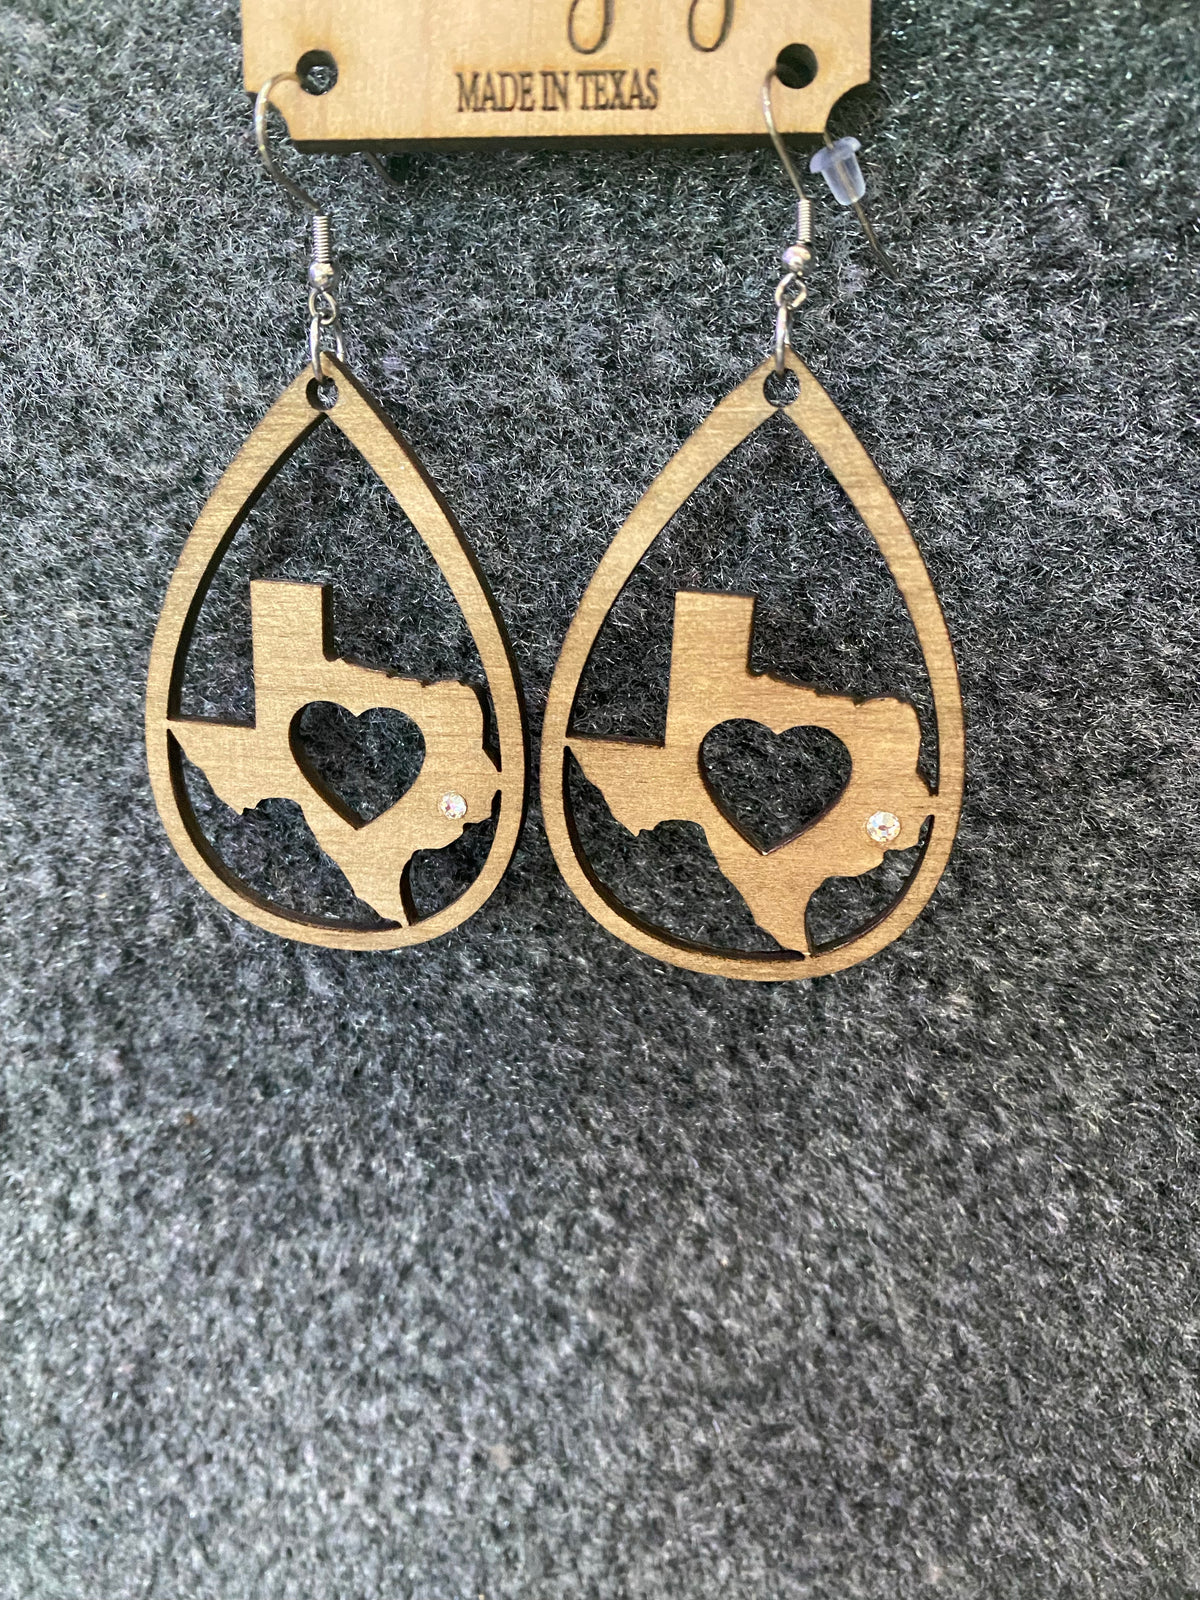 Texas earrings